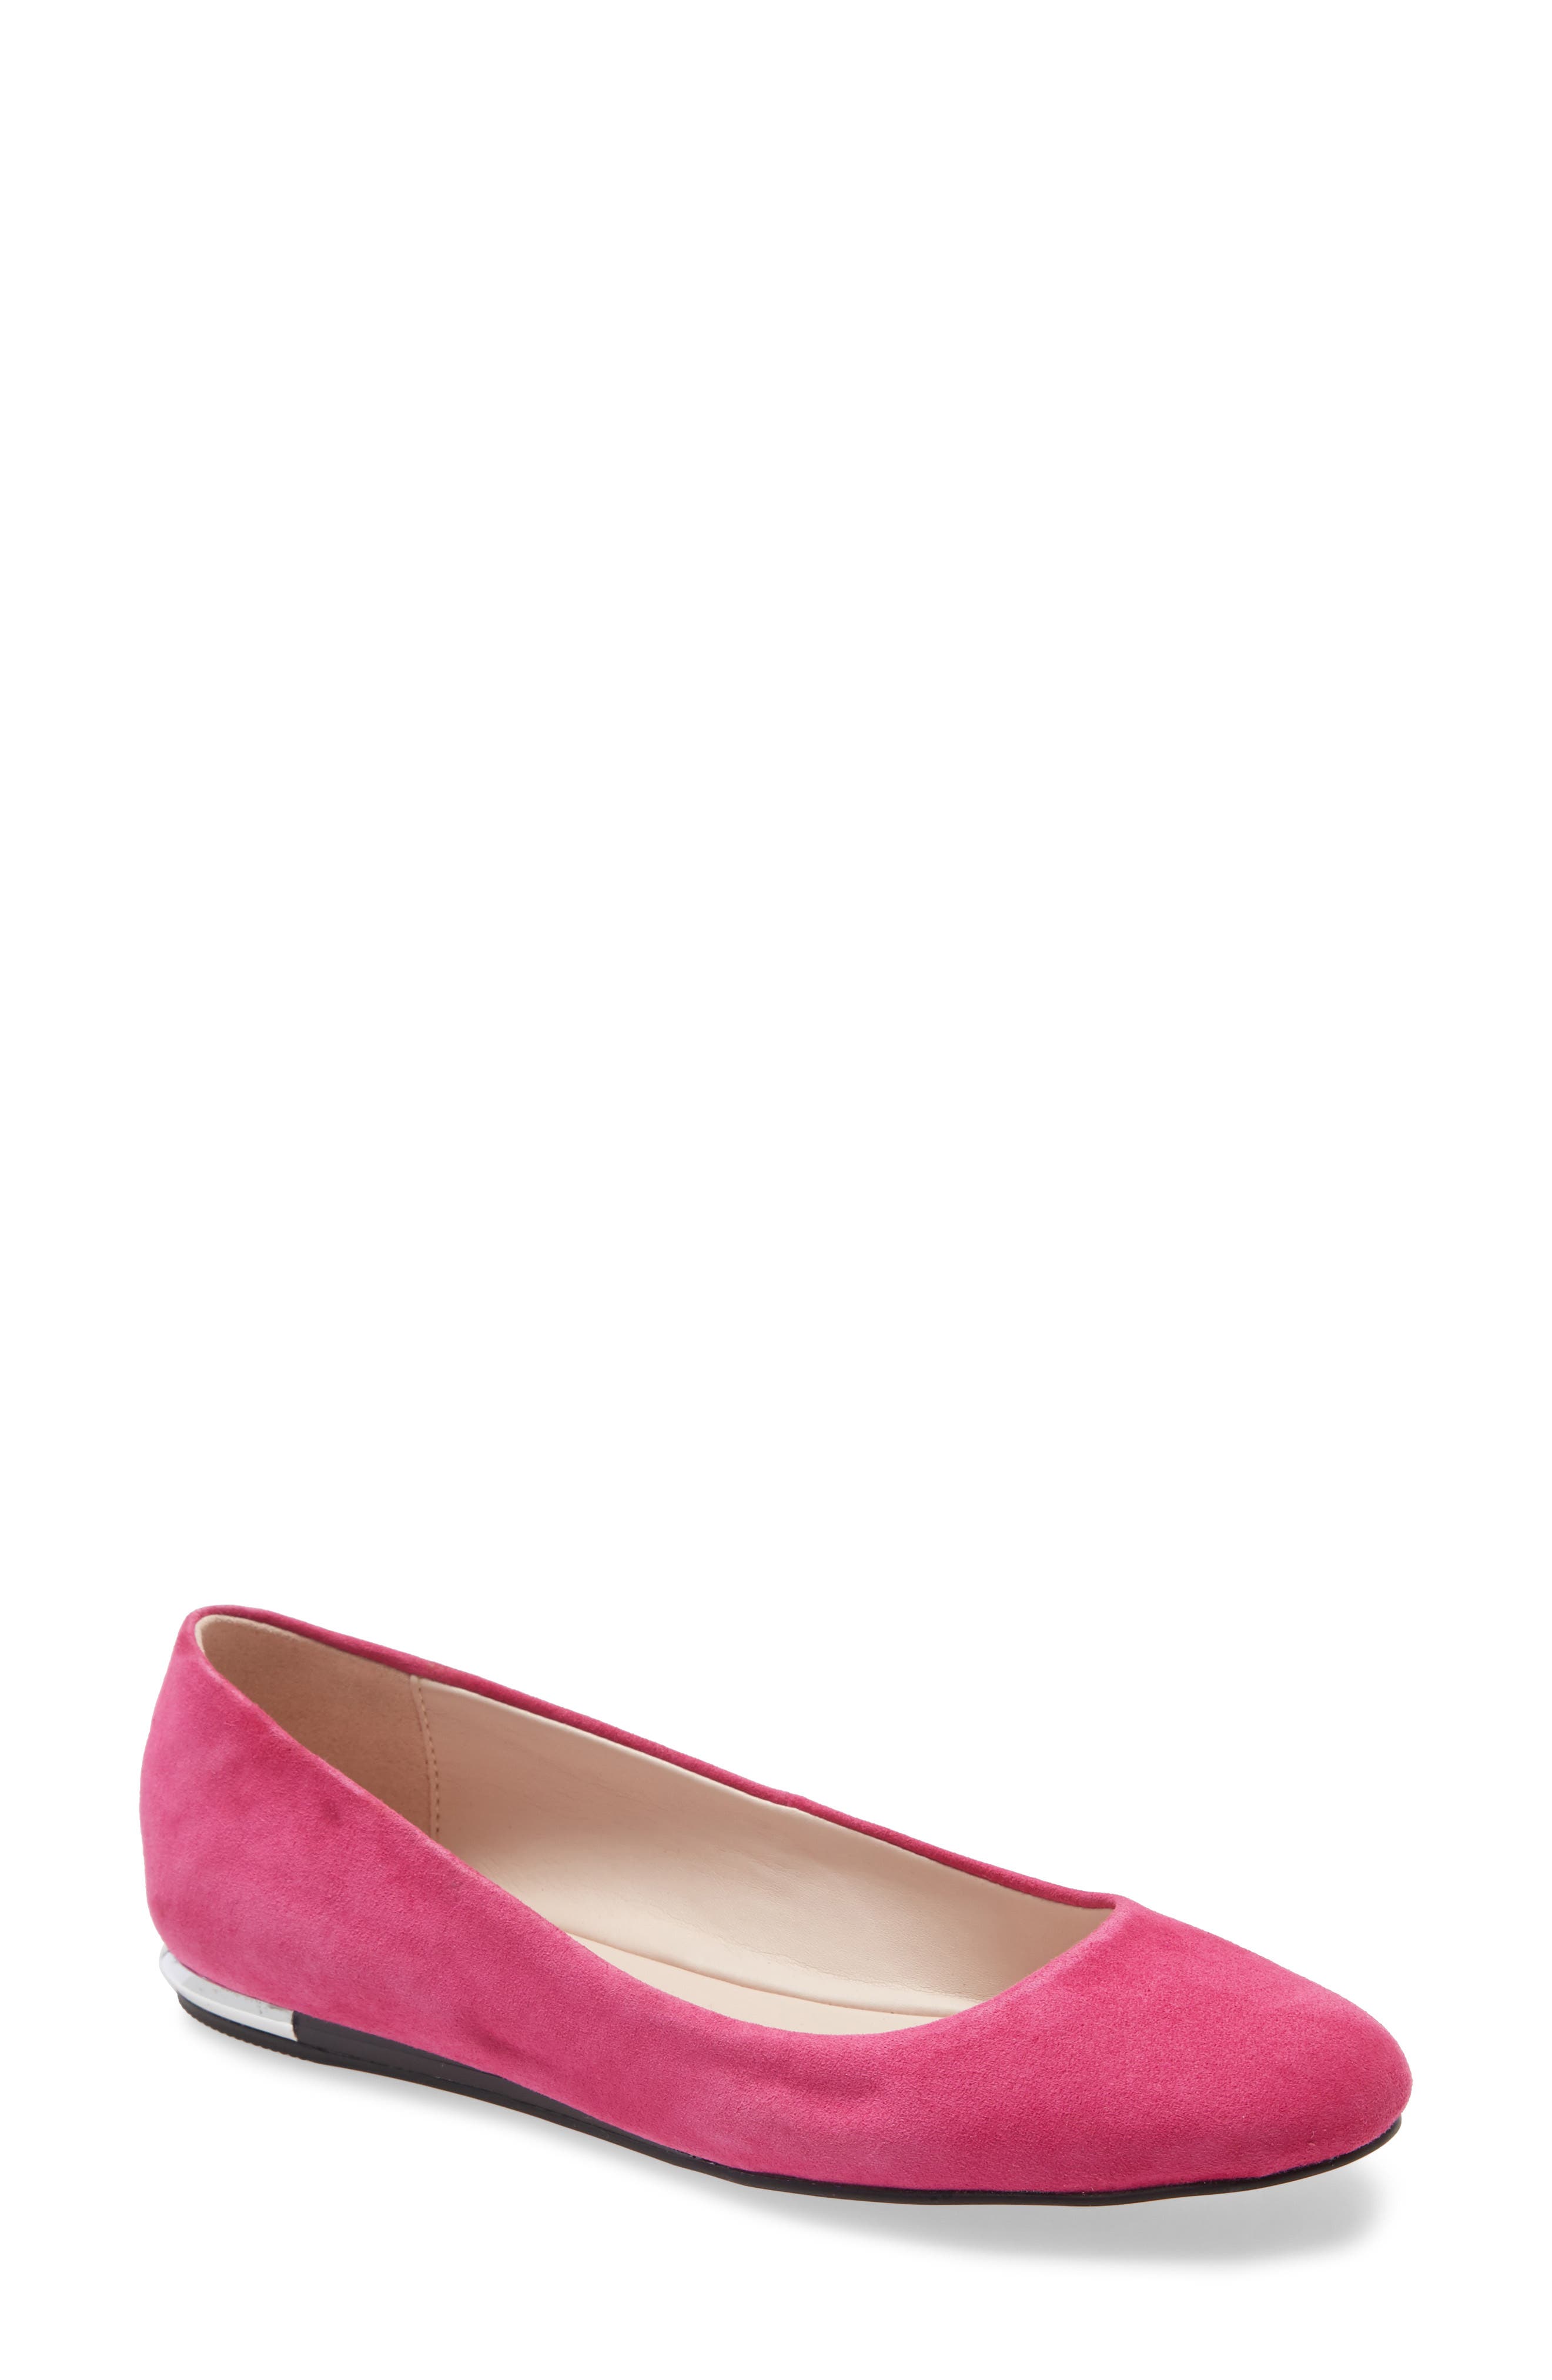 UPC 194060233758 product image for Women's Calvin Klein Kosi Skimmer Flat, Size 7 M - Pink | upcitemdb.com